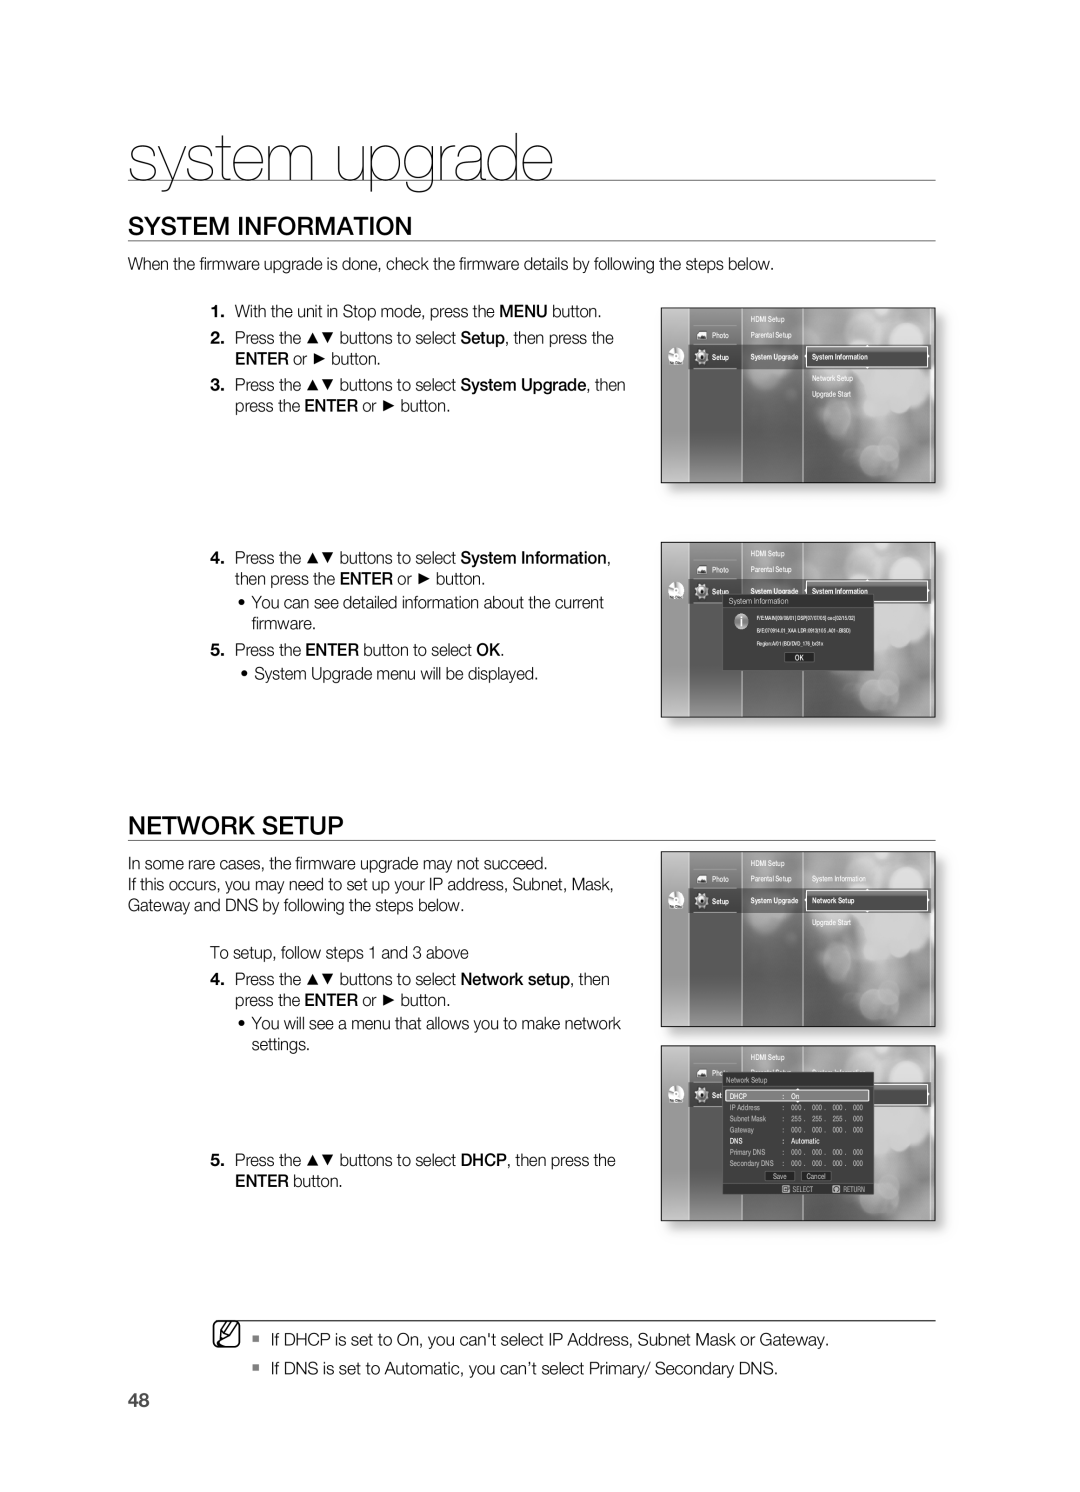 Samsung AH68-02019S manual SYSTEM InFORMATIOn, nETWORK SETUP, system upgrade, EnTER button 